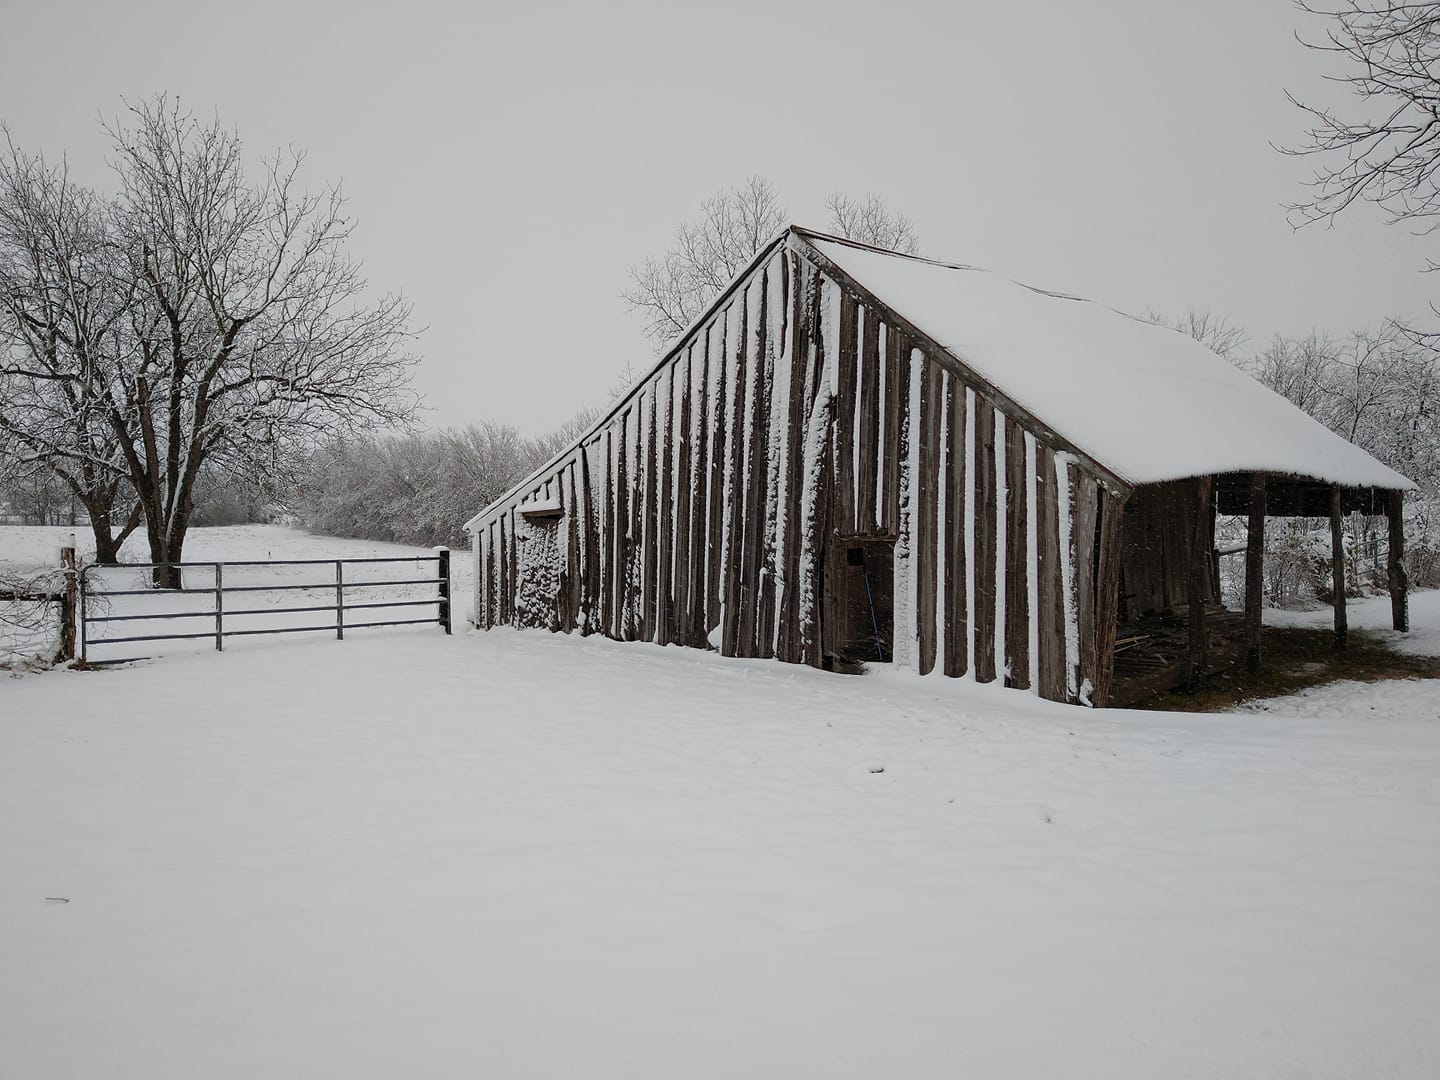 Snow Barn Scene in Caldwell (via Dan Kuciemba on Facebook)